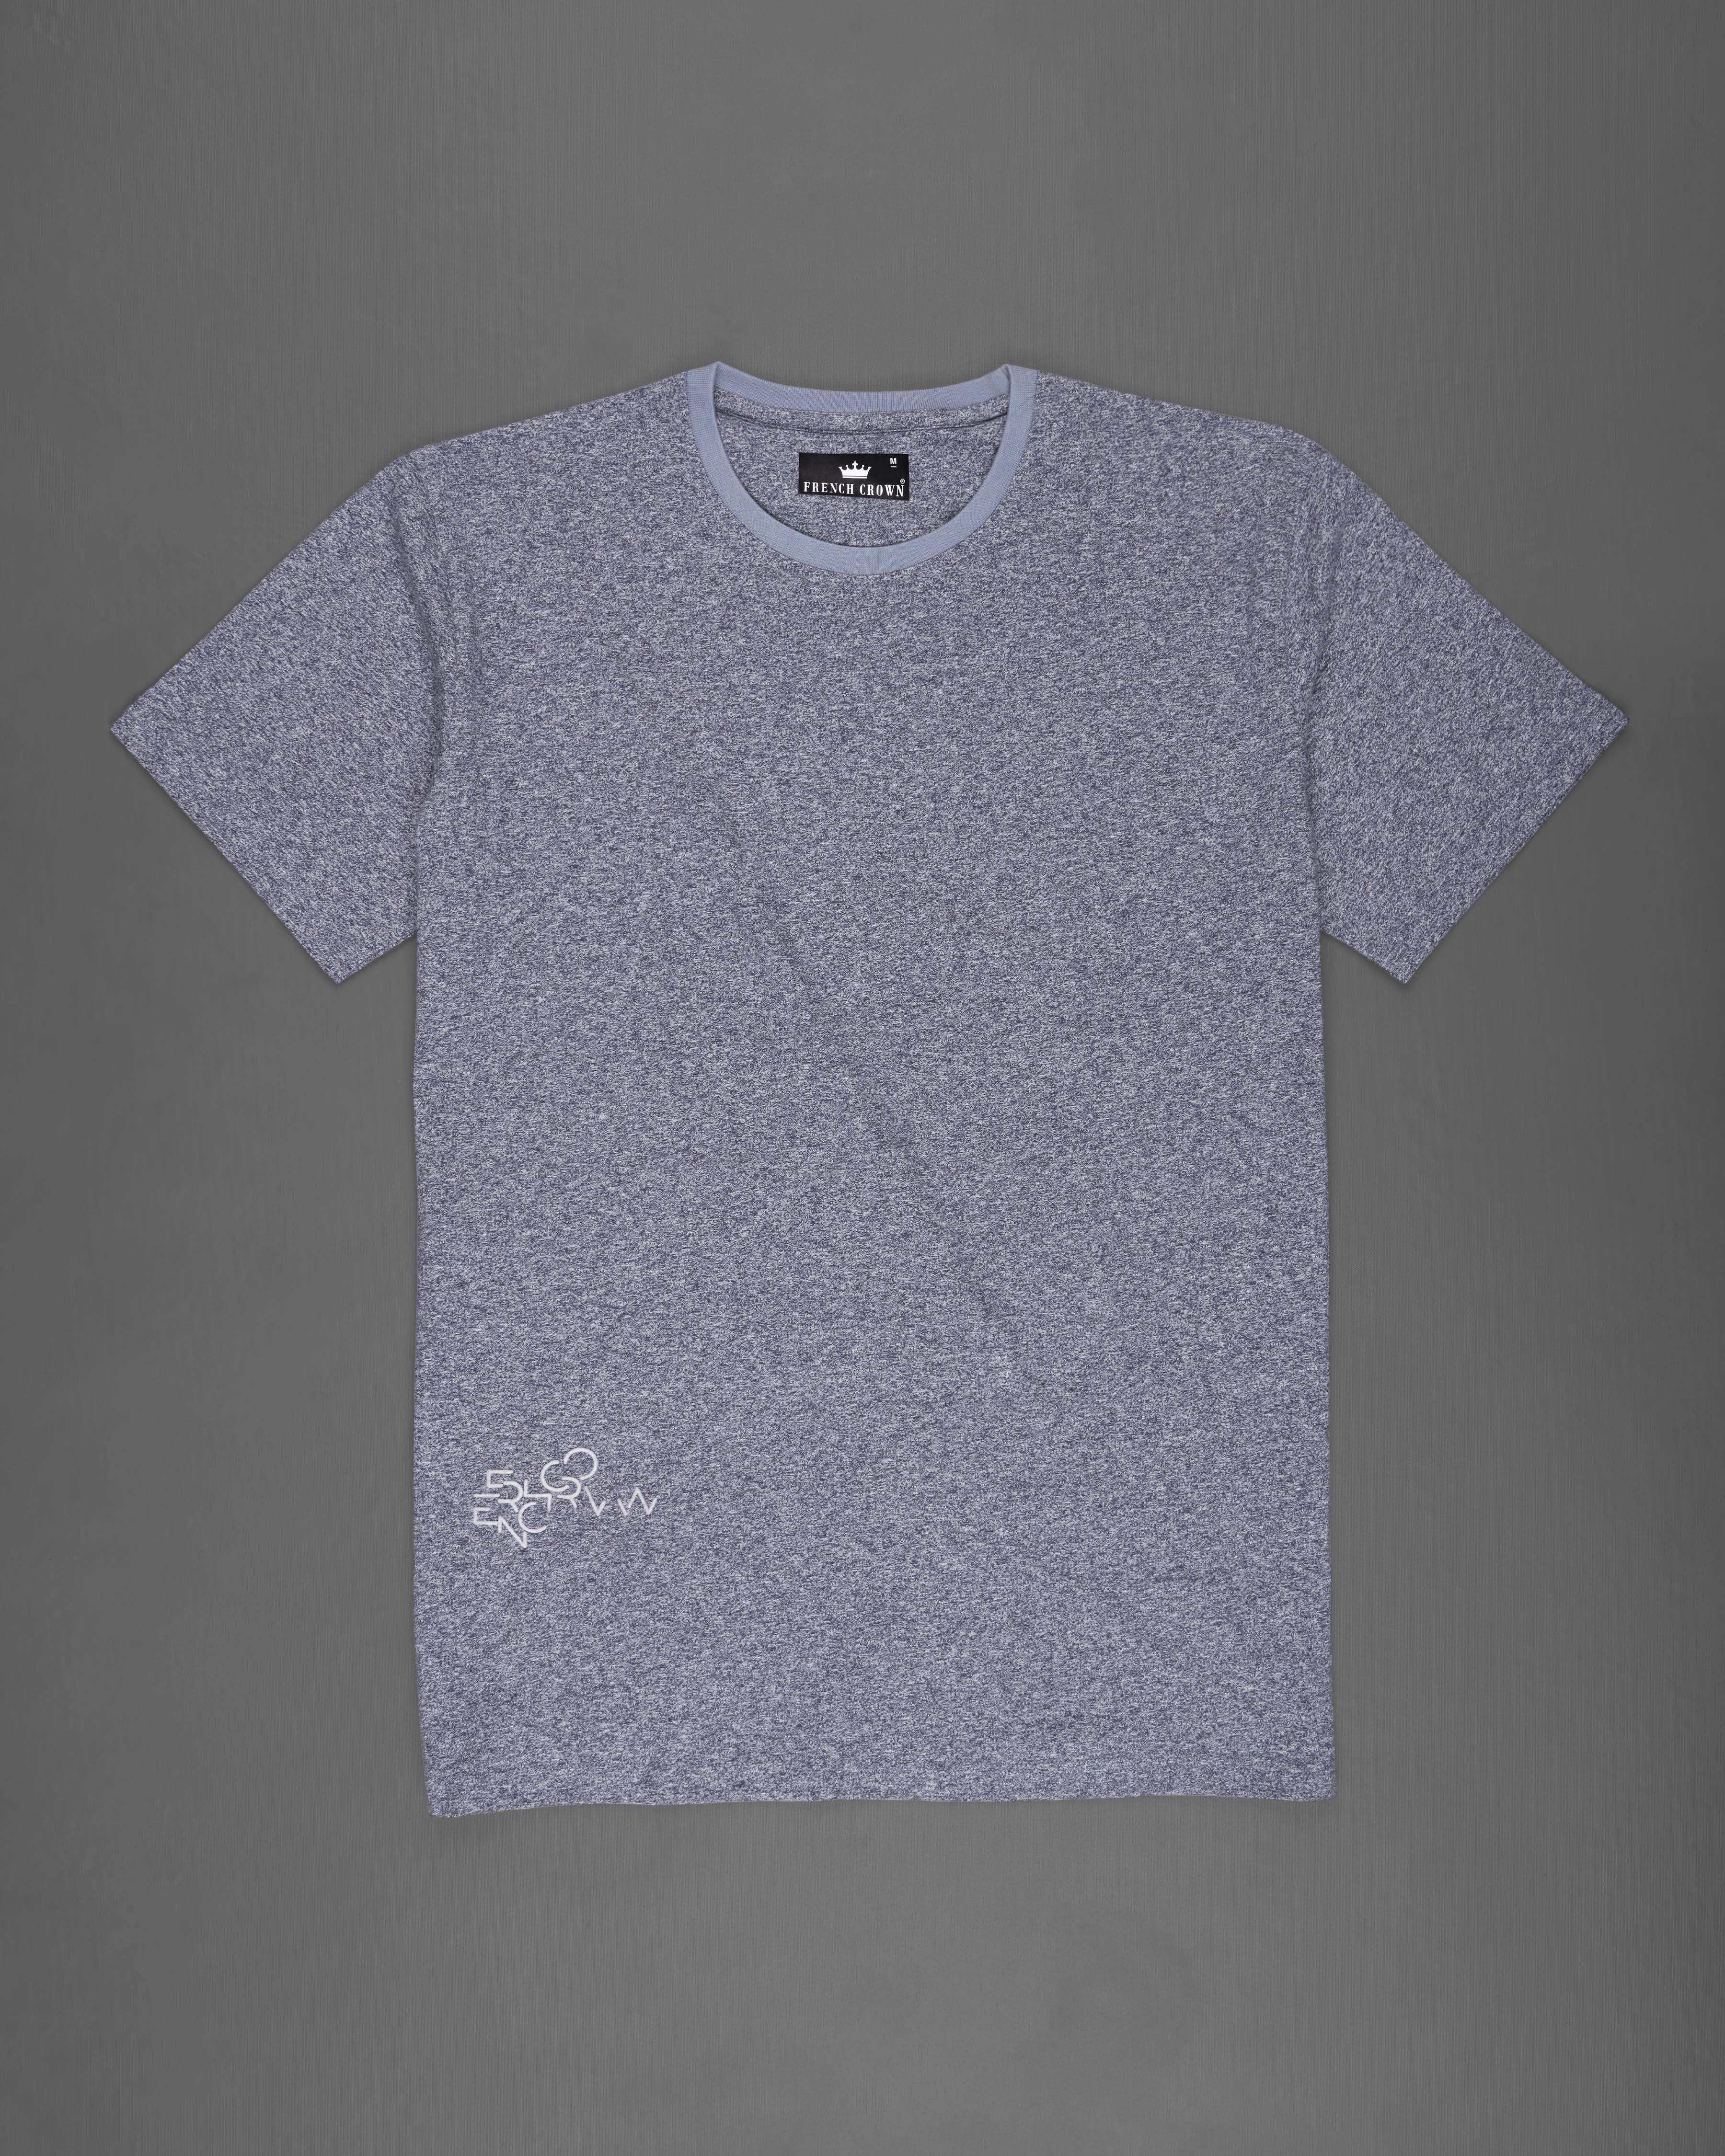 Mobster Gray Premium Cotton T-shirt TS655-S, TS655-M, TS655-L, TS655-XL, TS655-XXL\